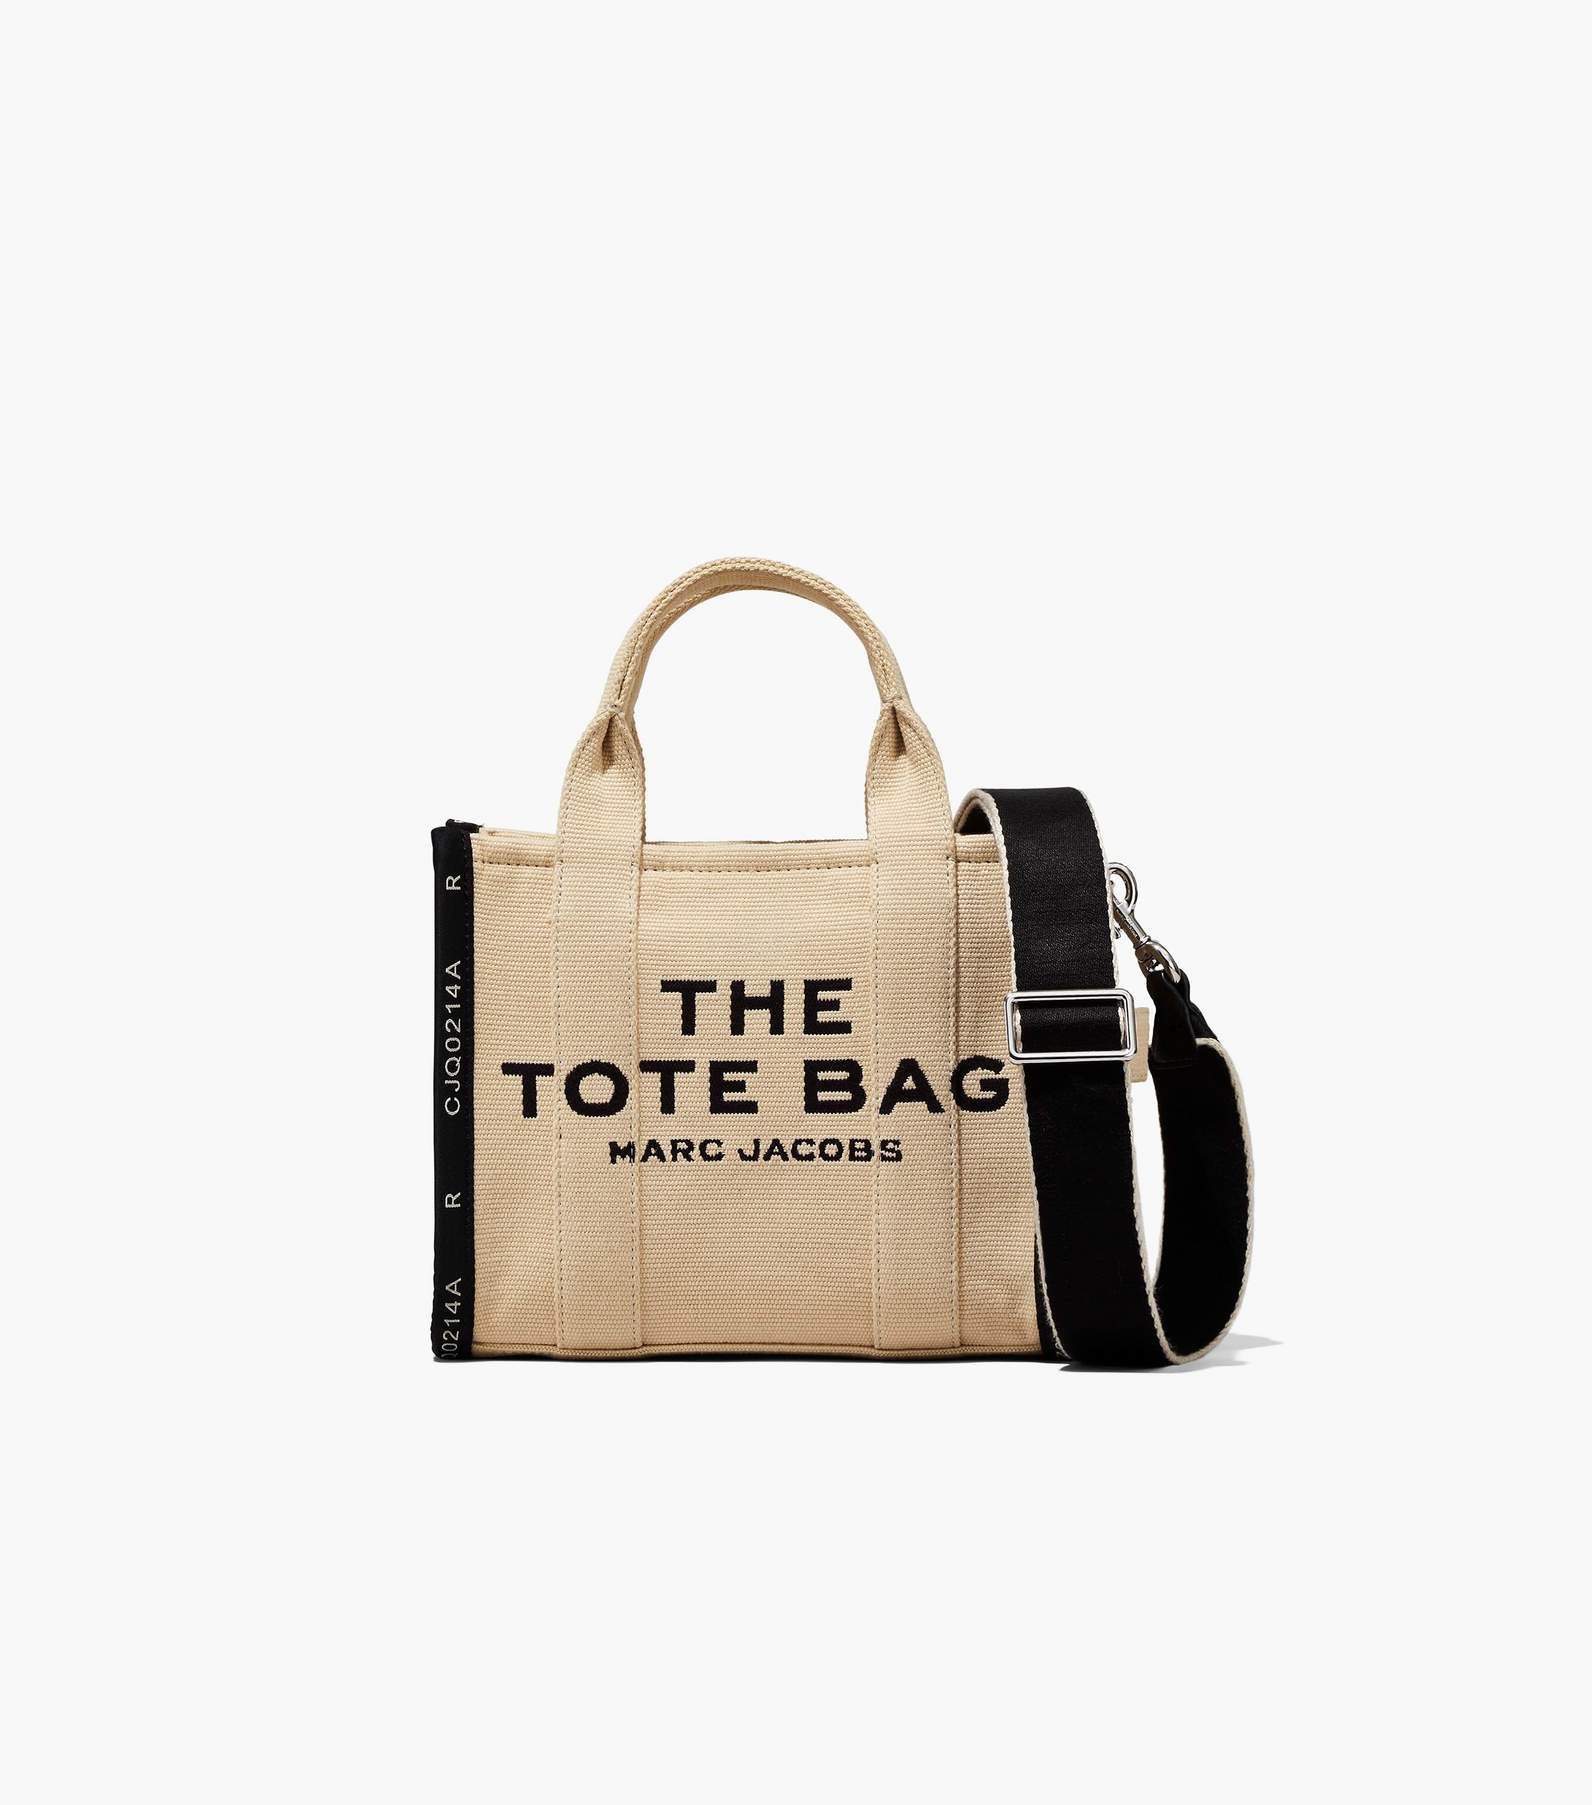 The Jacquard Small Tote Bag